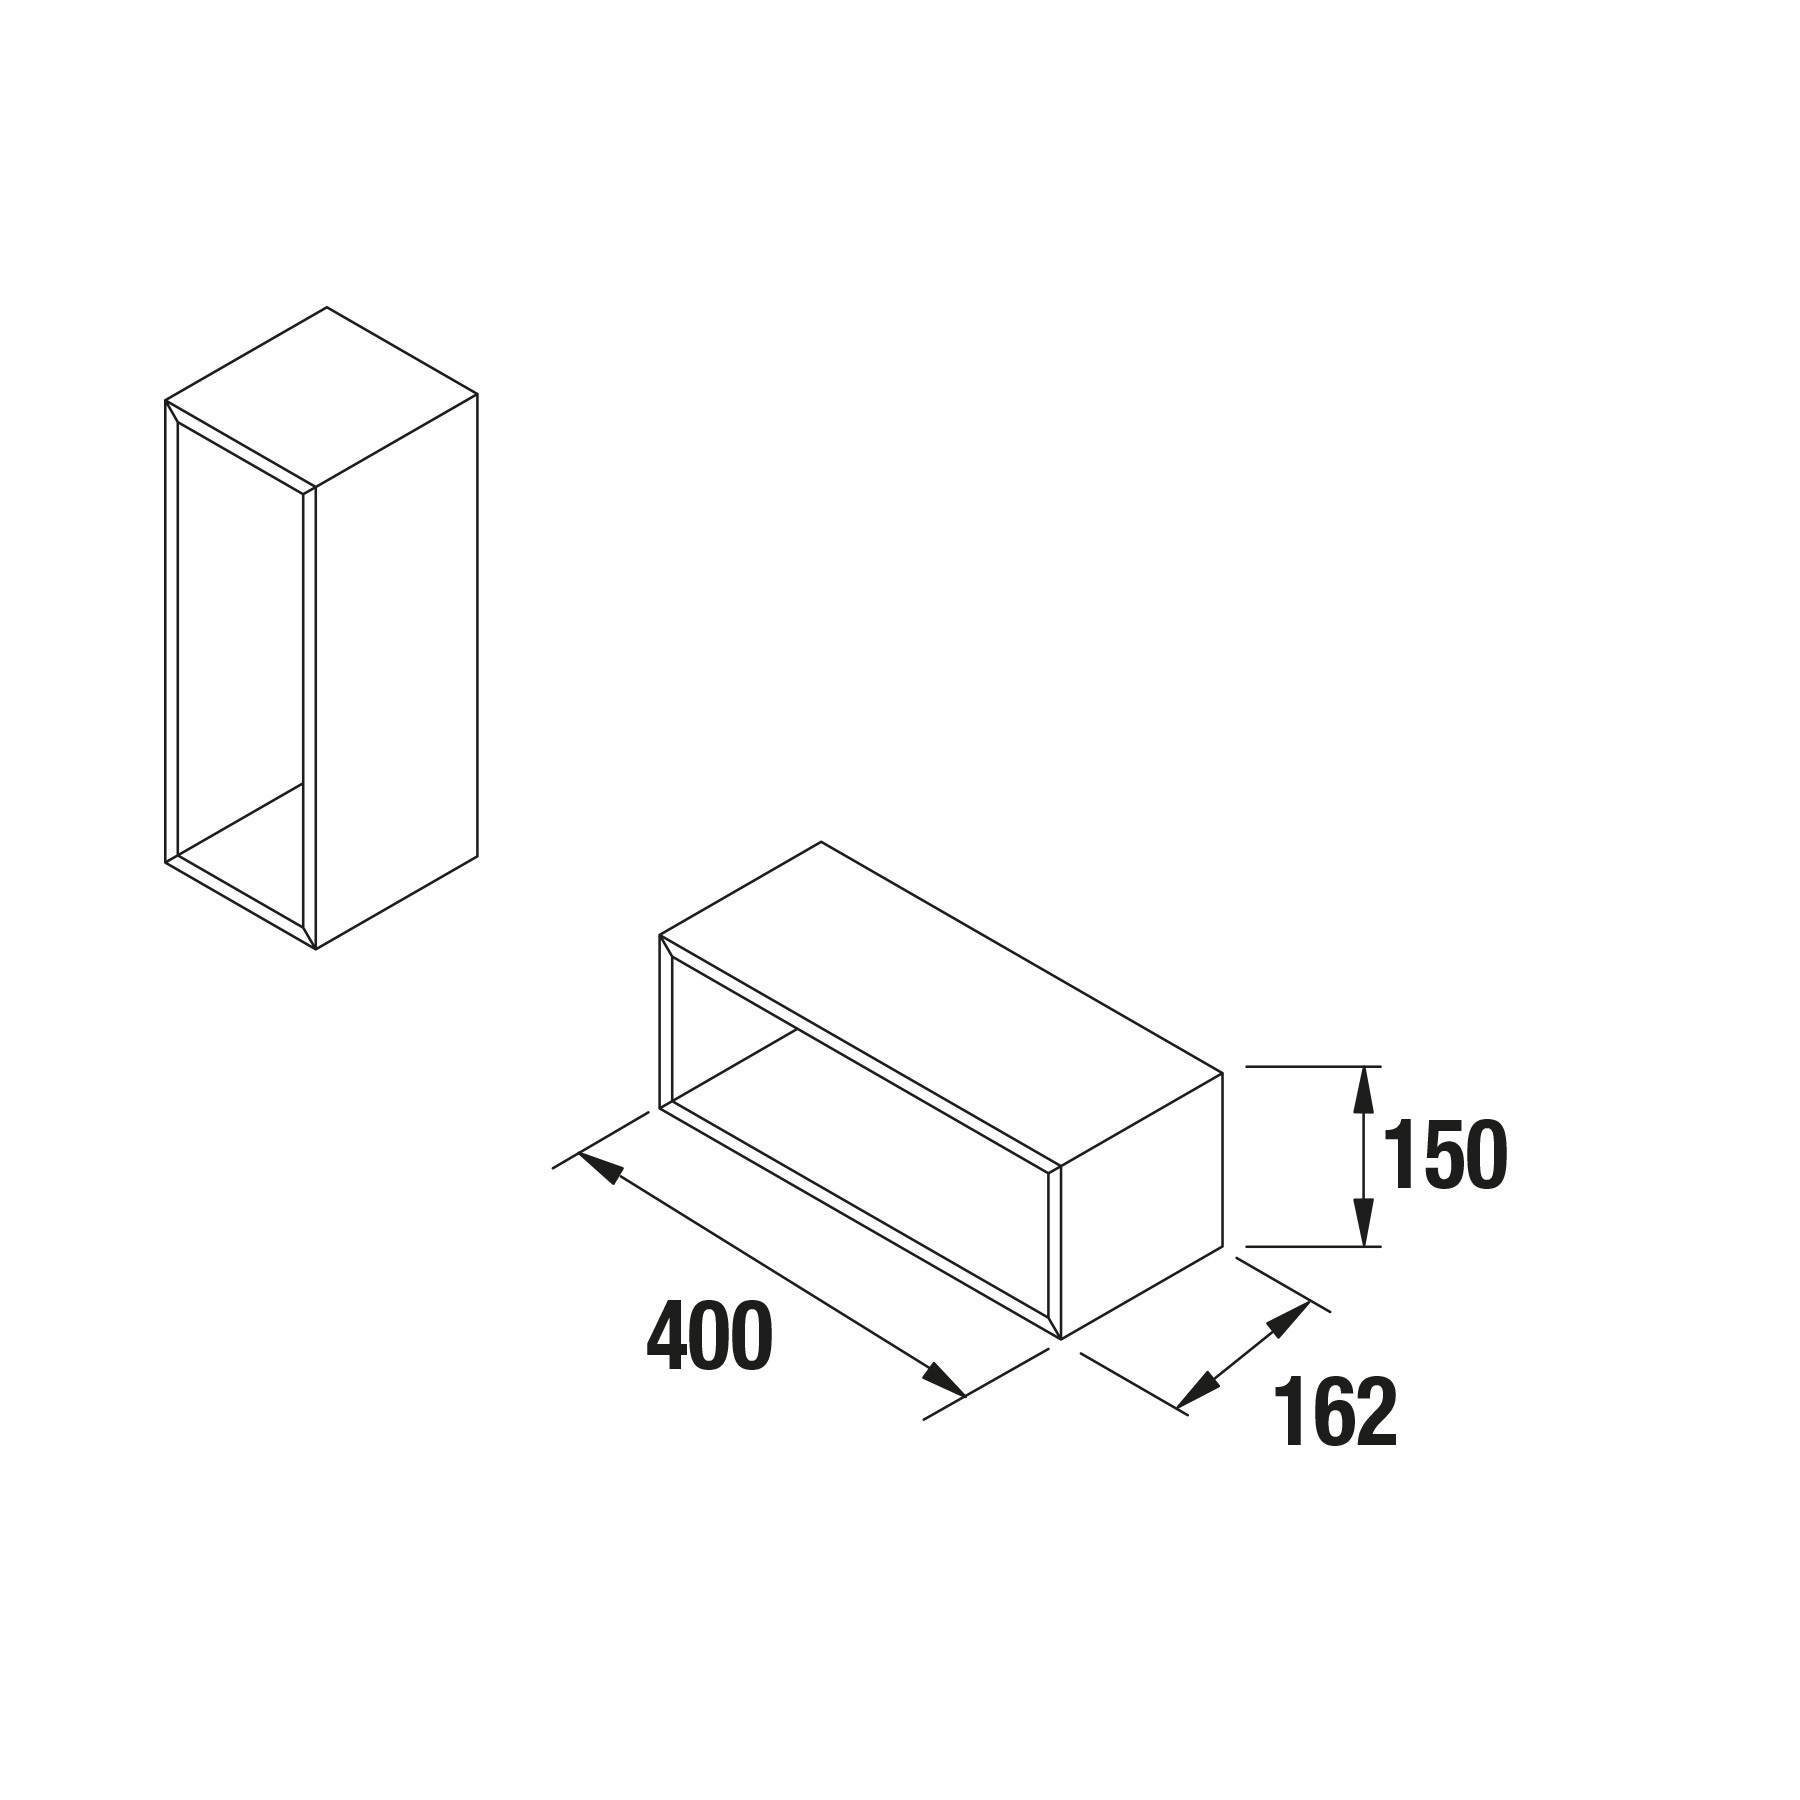 Meuble module salle de bain ALLIANCE 400 horizontal vertical 1 niche blanc-TX 400 x 150 x 162 mm - Réf:23226